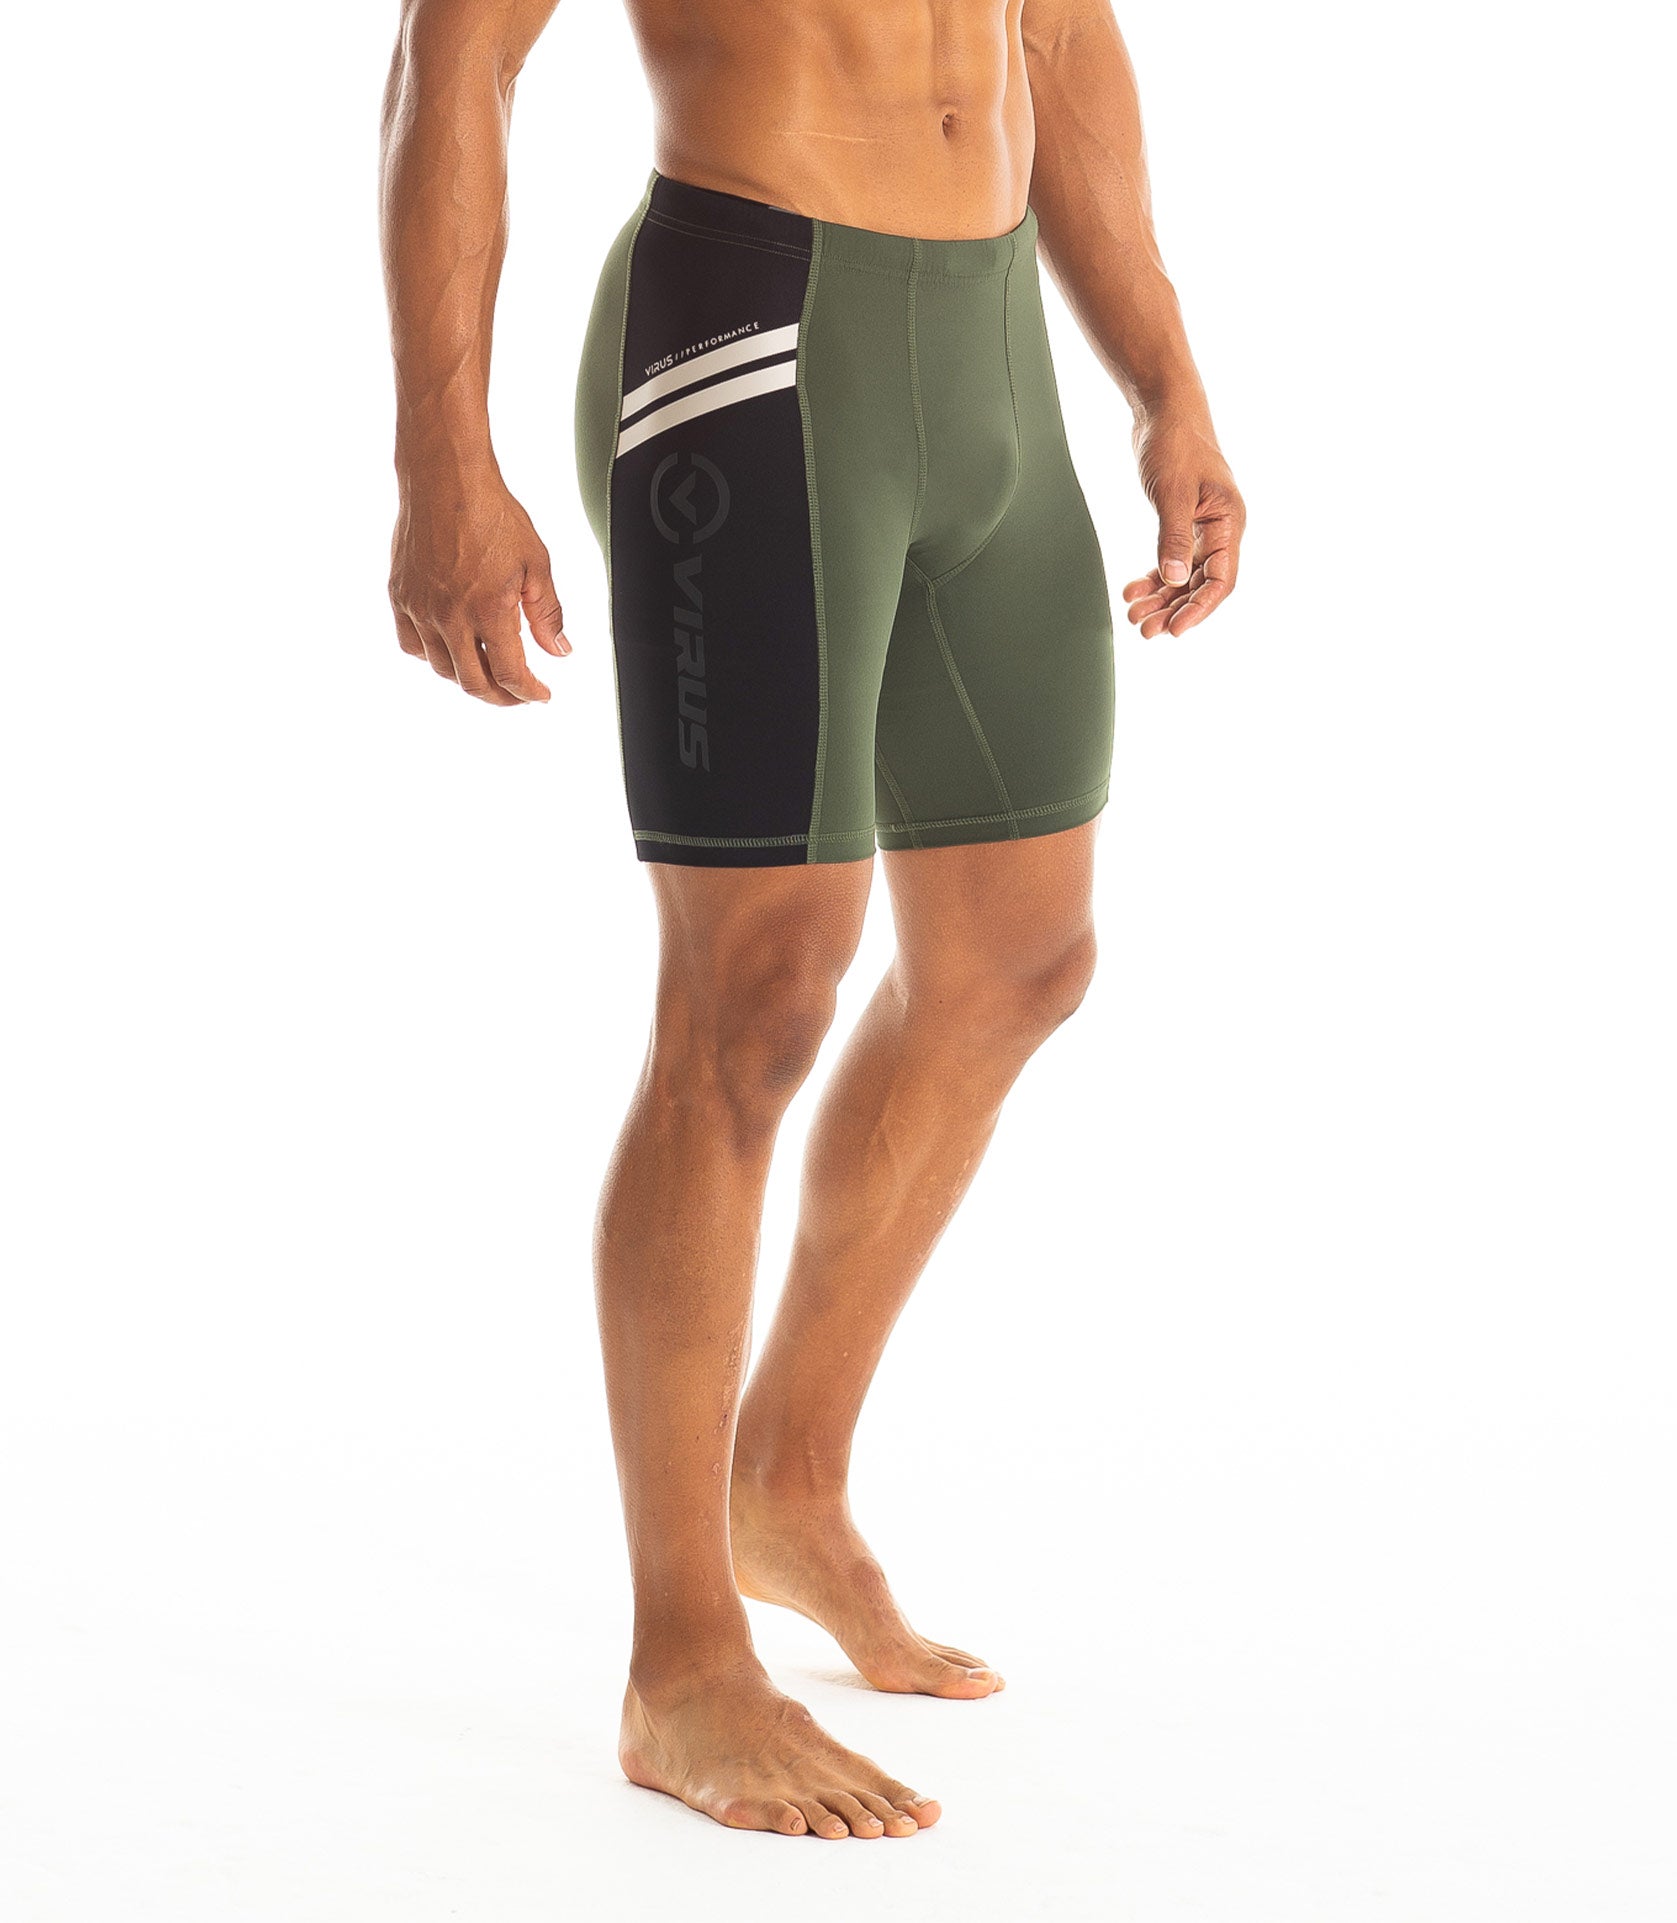 Men's compression shorts ⇒ Buy compression shorts for men HERE!